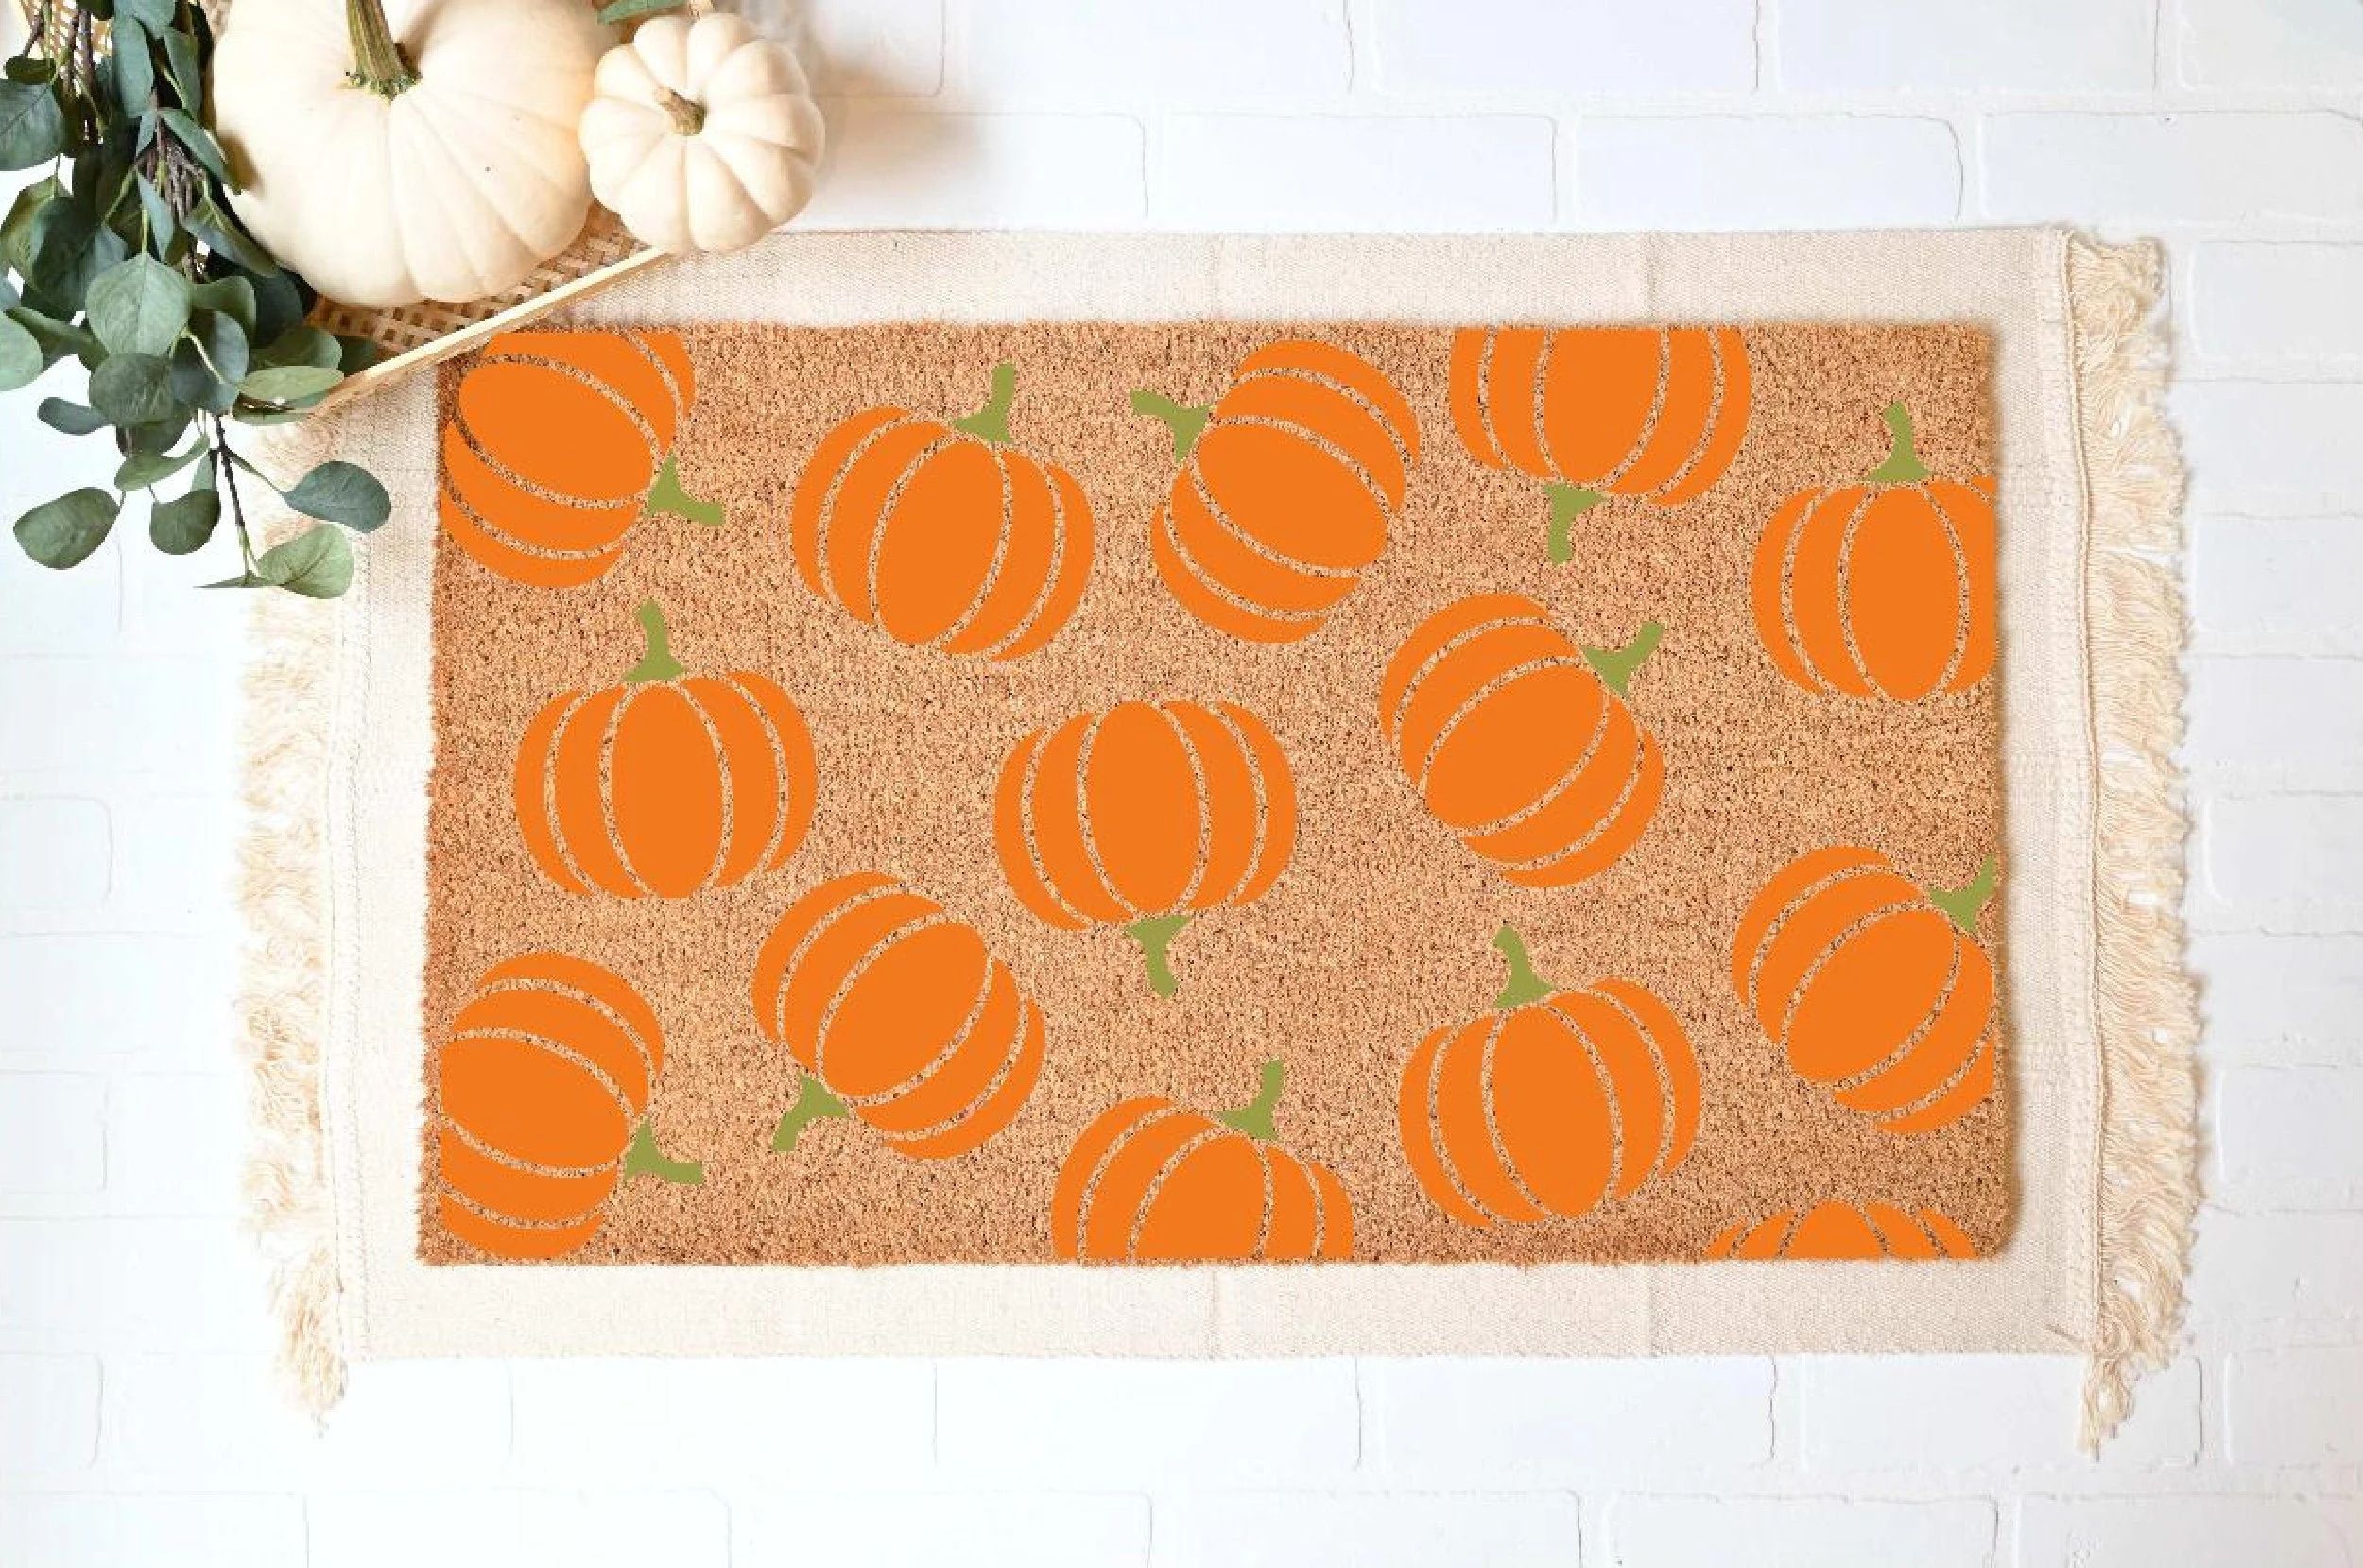 Hey There Pumpkin Doormat, Fall Welcome Mat, Fall Decor, Funny Doormat, Funny Welcome Mat, Hallow... | Etsy (US)